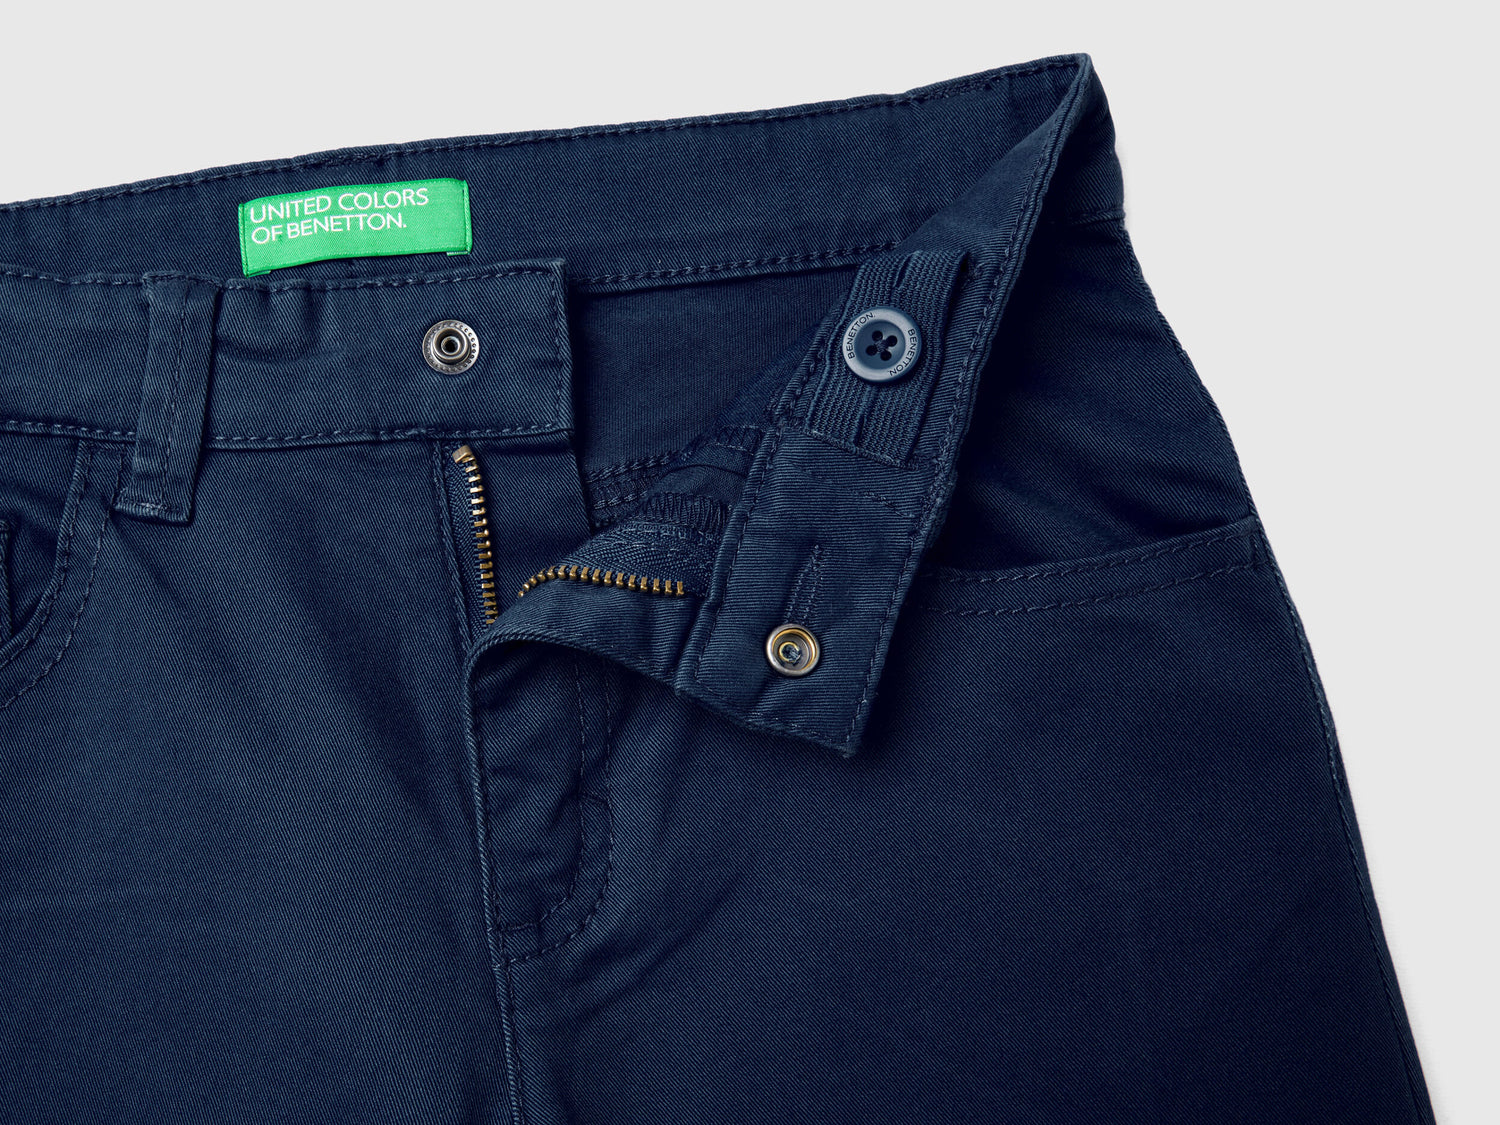 Five-Pocket Slim Fit Trousers